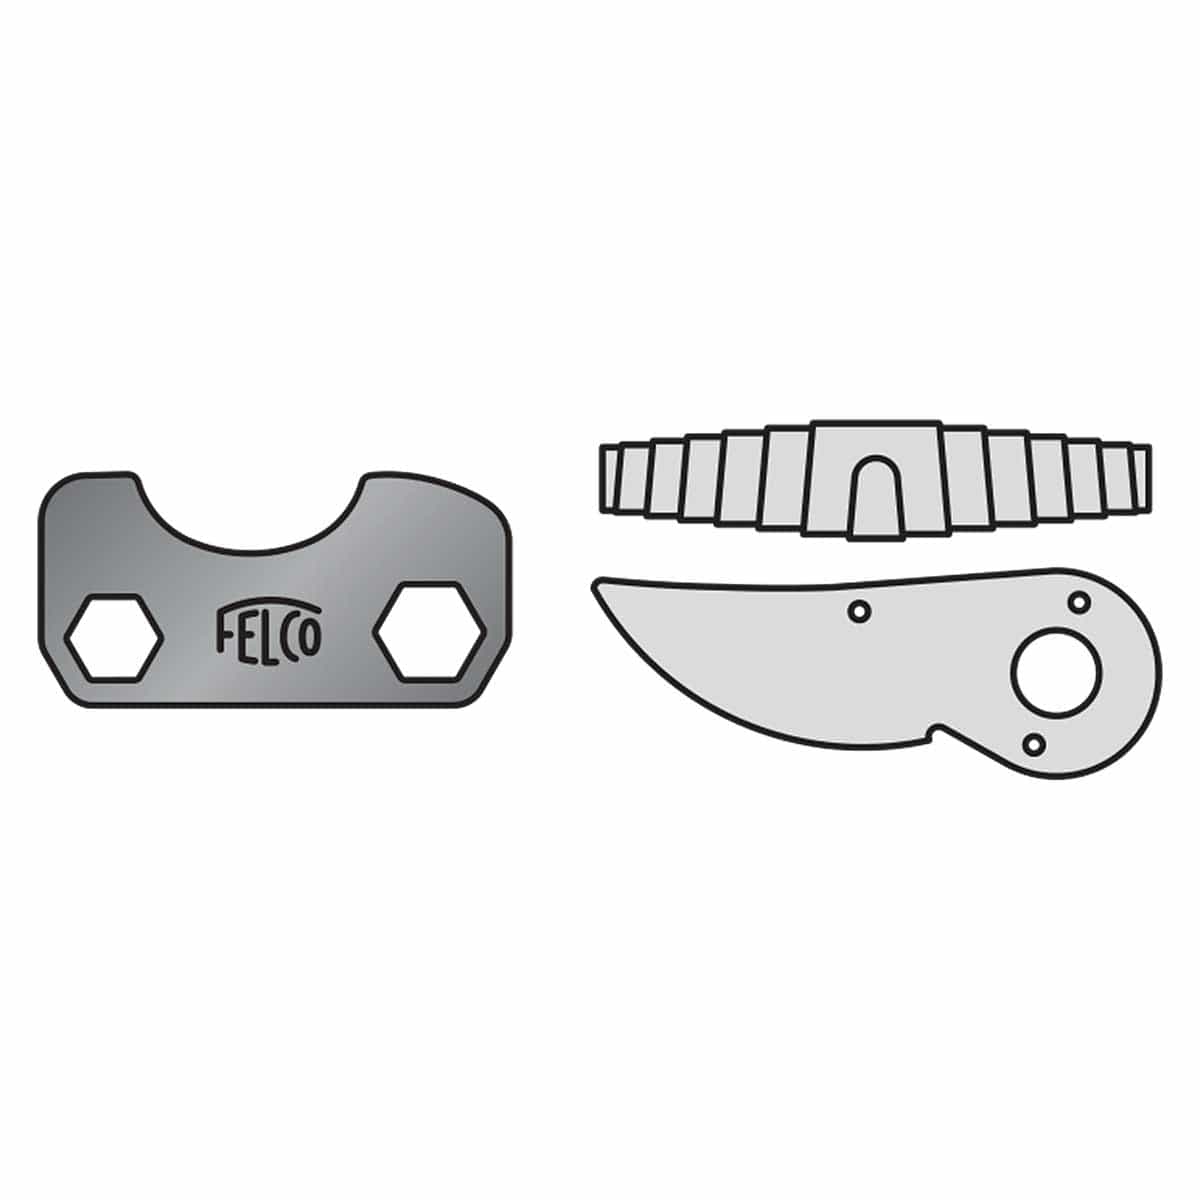 Felco 906 Carbide stone Sharpening tool